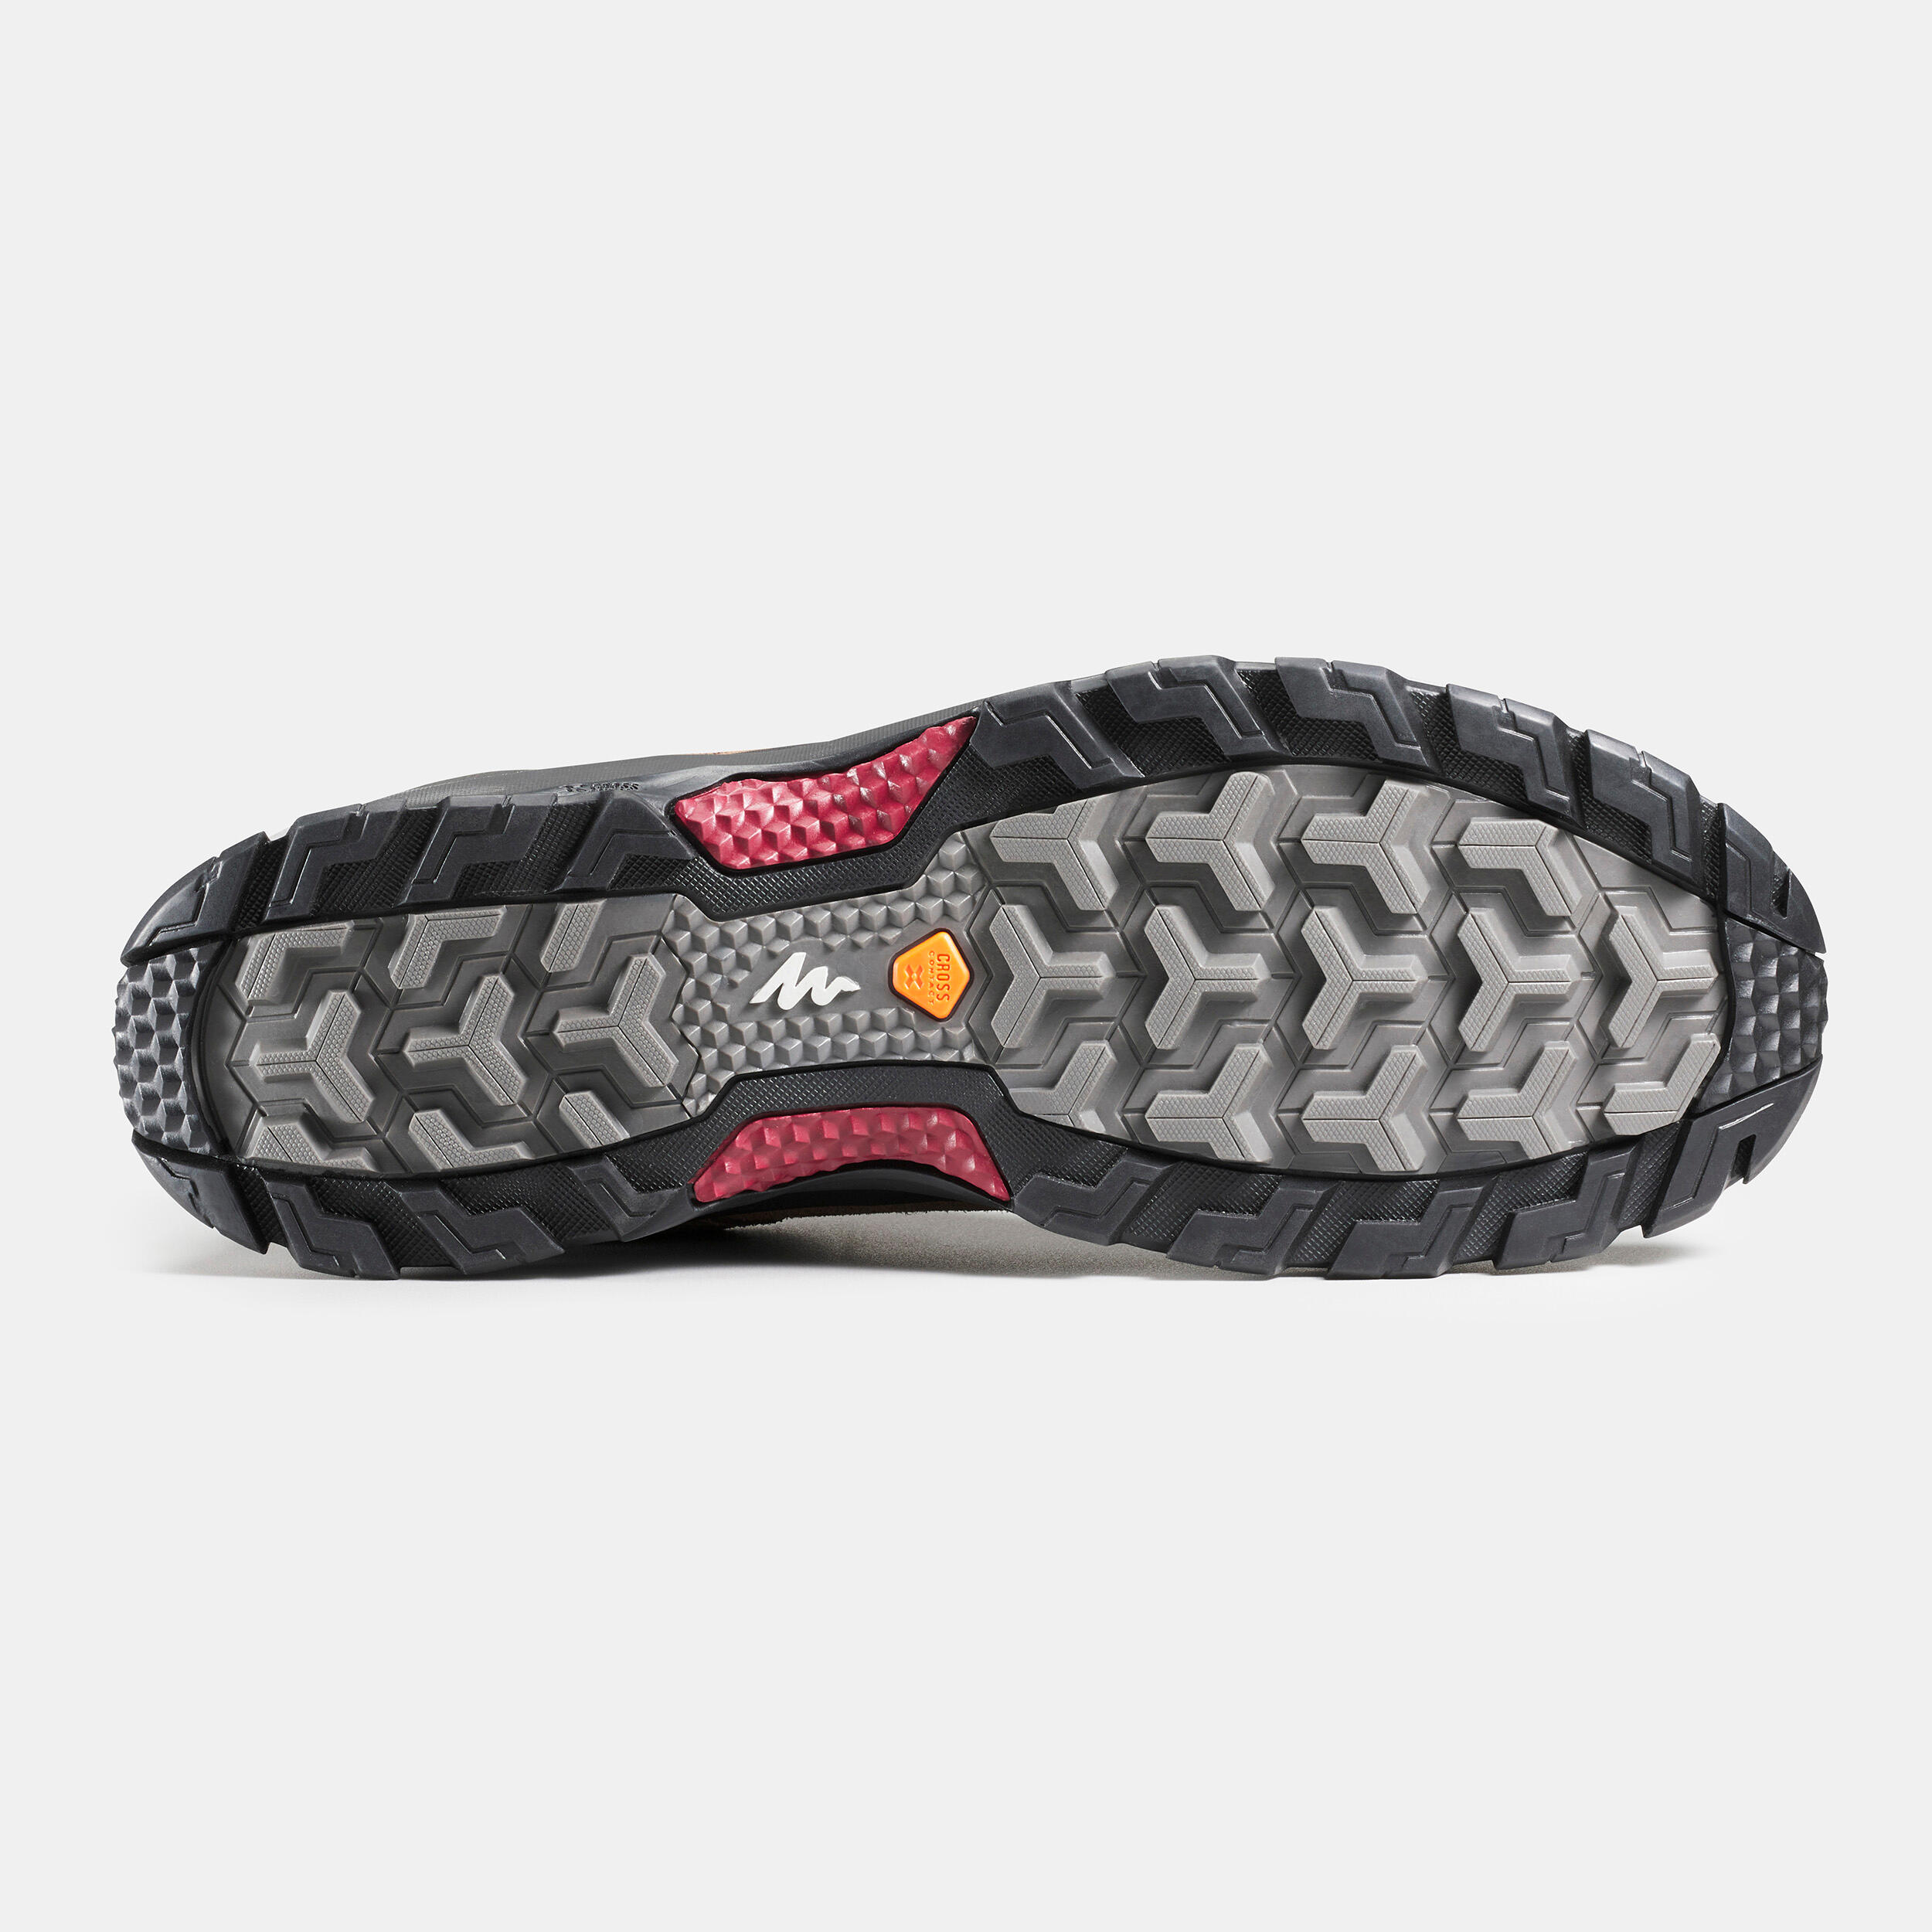 Men's waterproof mountain hiking shoes - MH500 - Brown 3/7